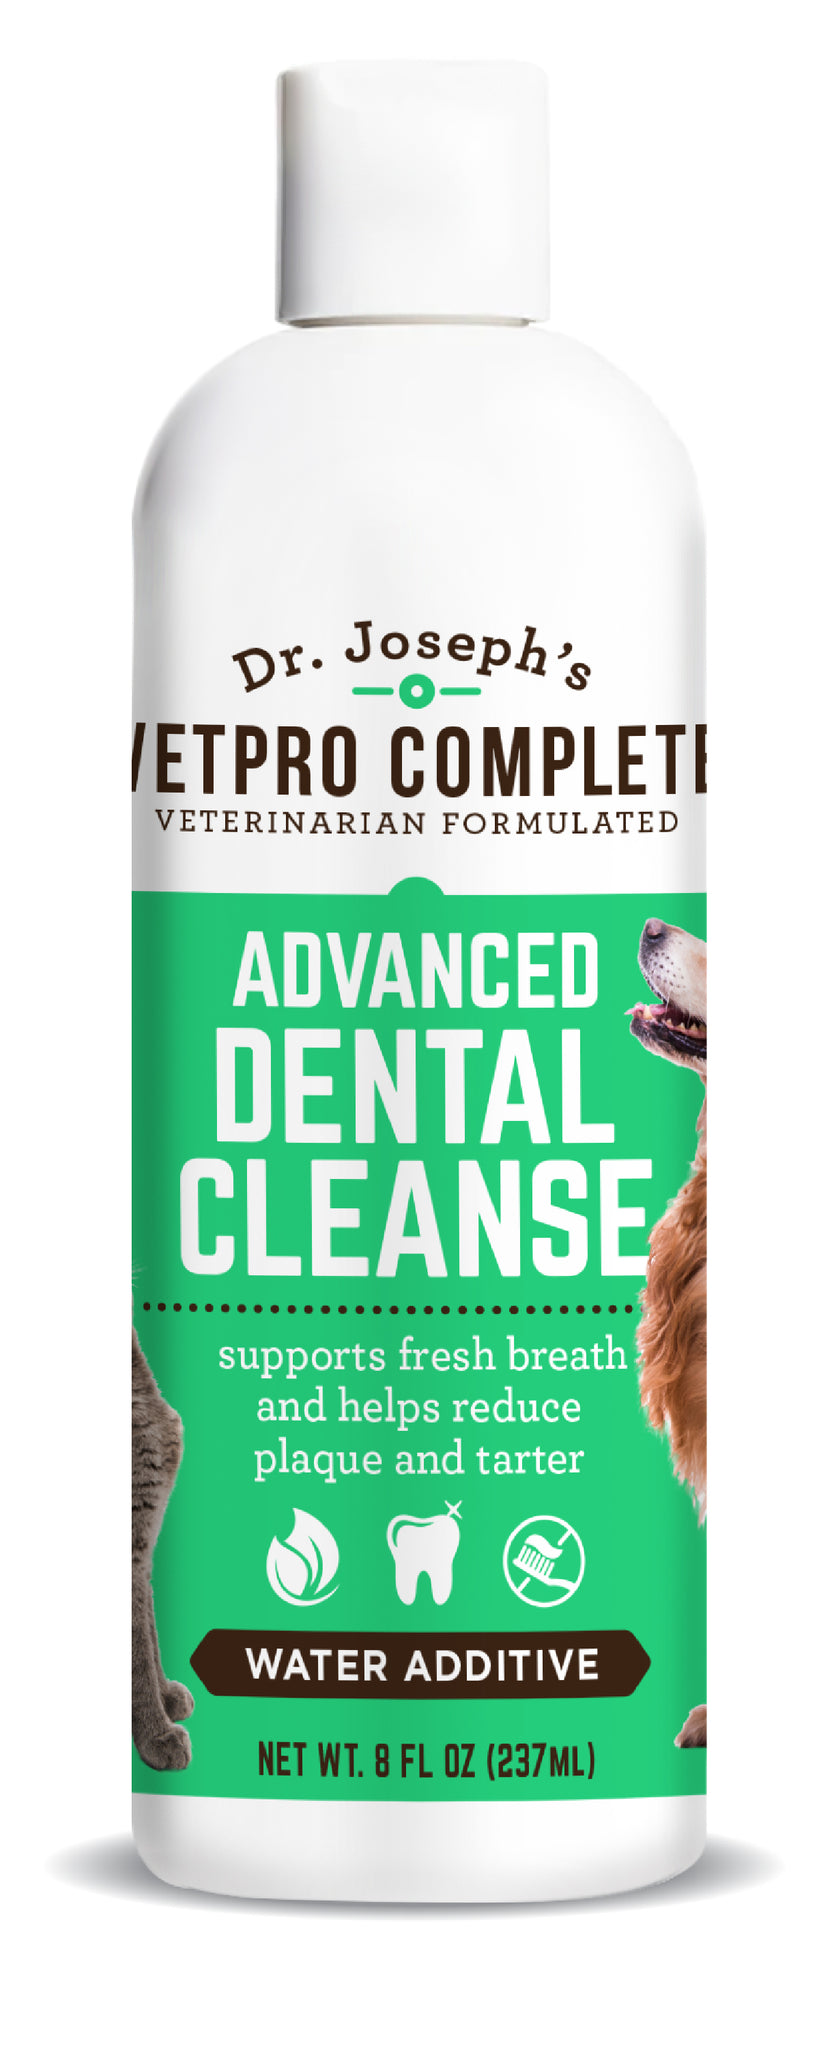 dr josephs dental cleanse - vetpro complete